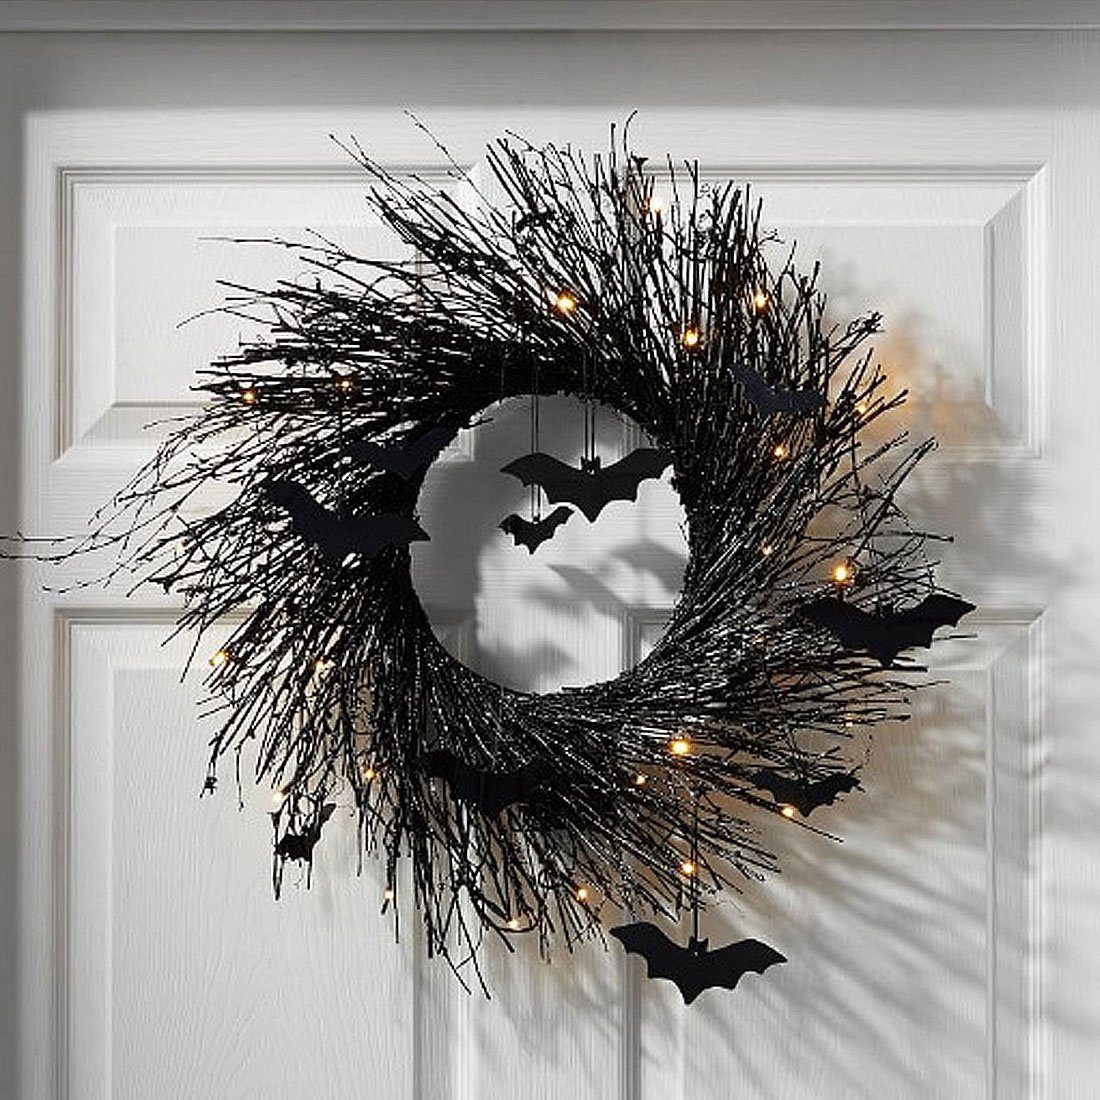 Dekoration Fledermaus Wandbehang, Kunstgirlande DÖRÖY Glühgirlande,Party Halloween Schwarze